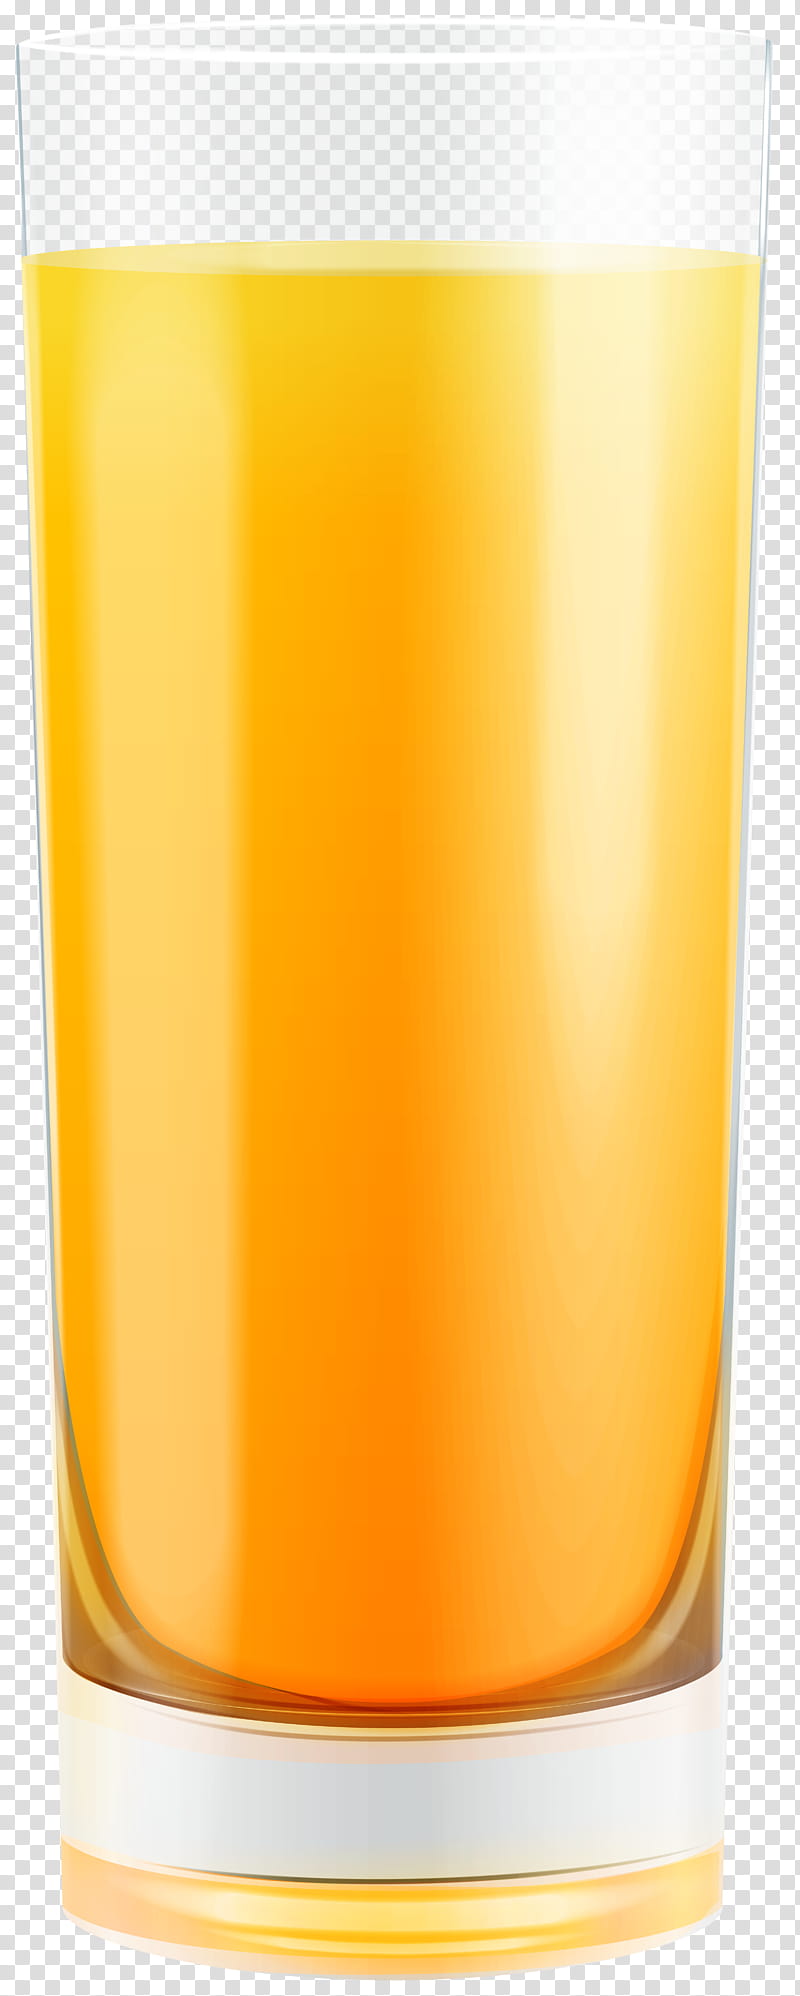 Juice, Orange Drink, Orange Juice, Orange Soft Drink, Harvey Wallbanger, Bellini, Pint Glass, Yellow transparent background PNG clipart